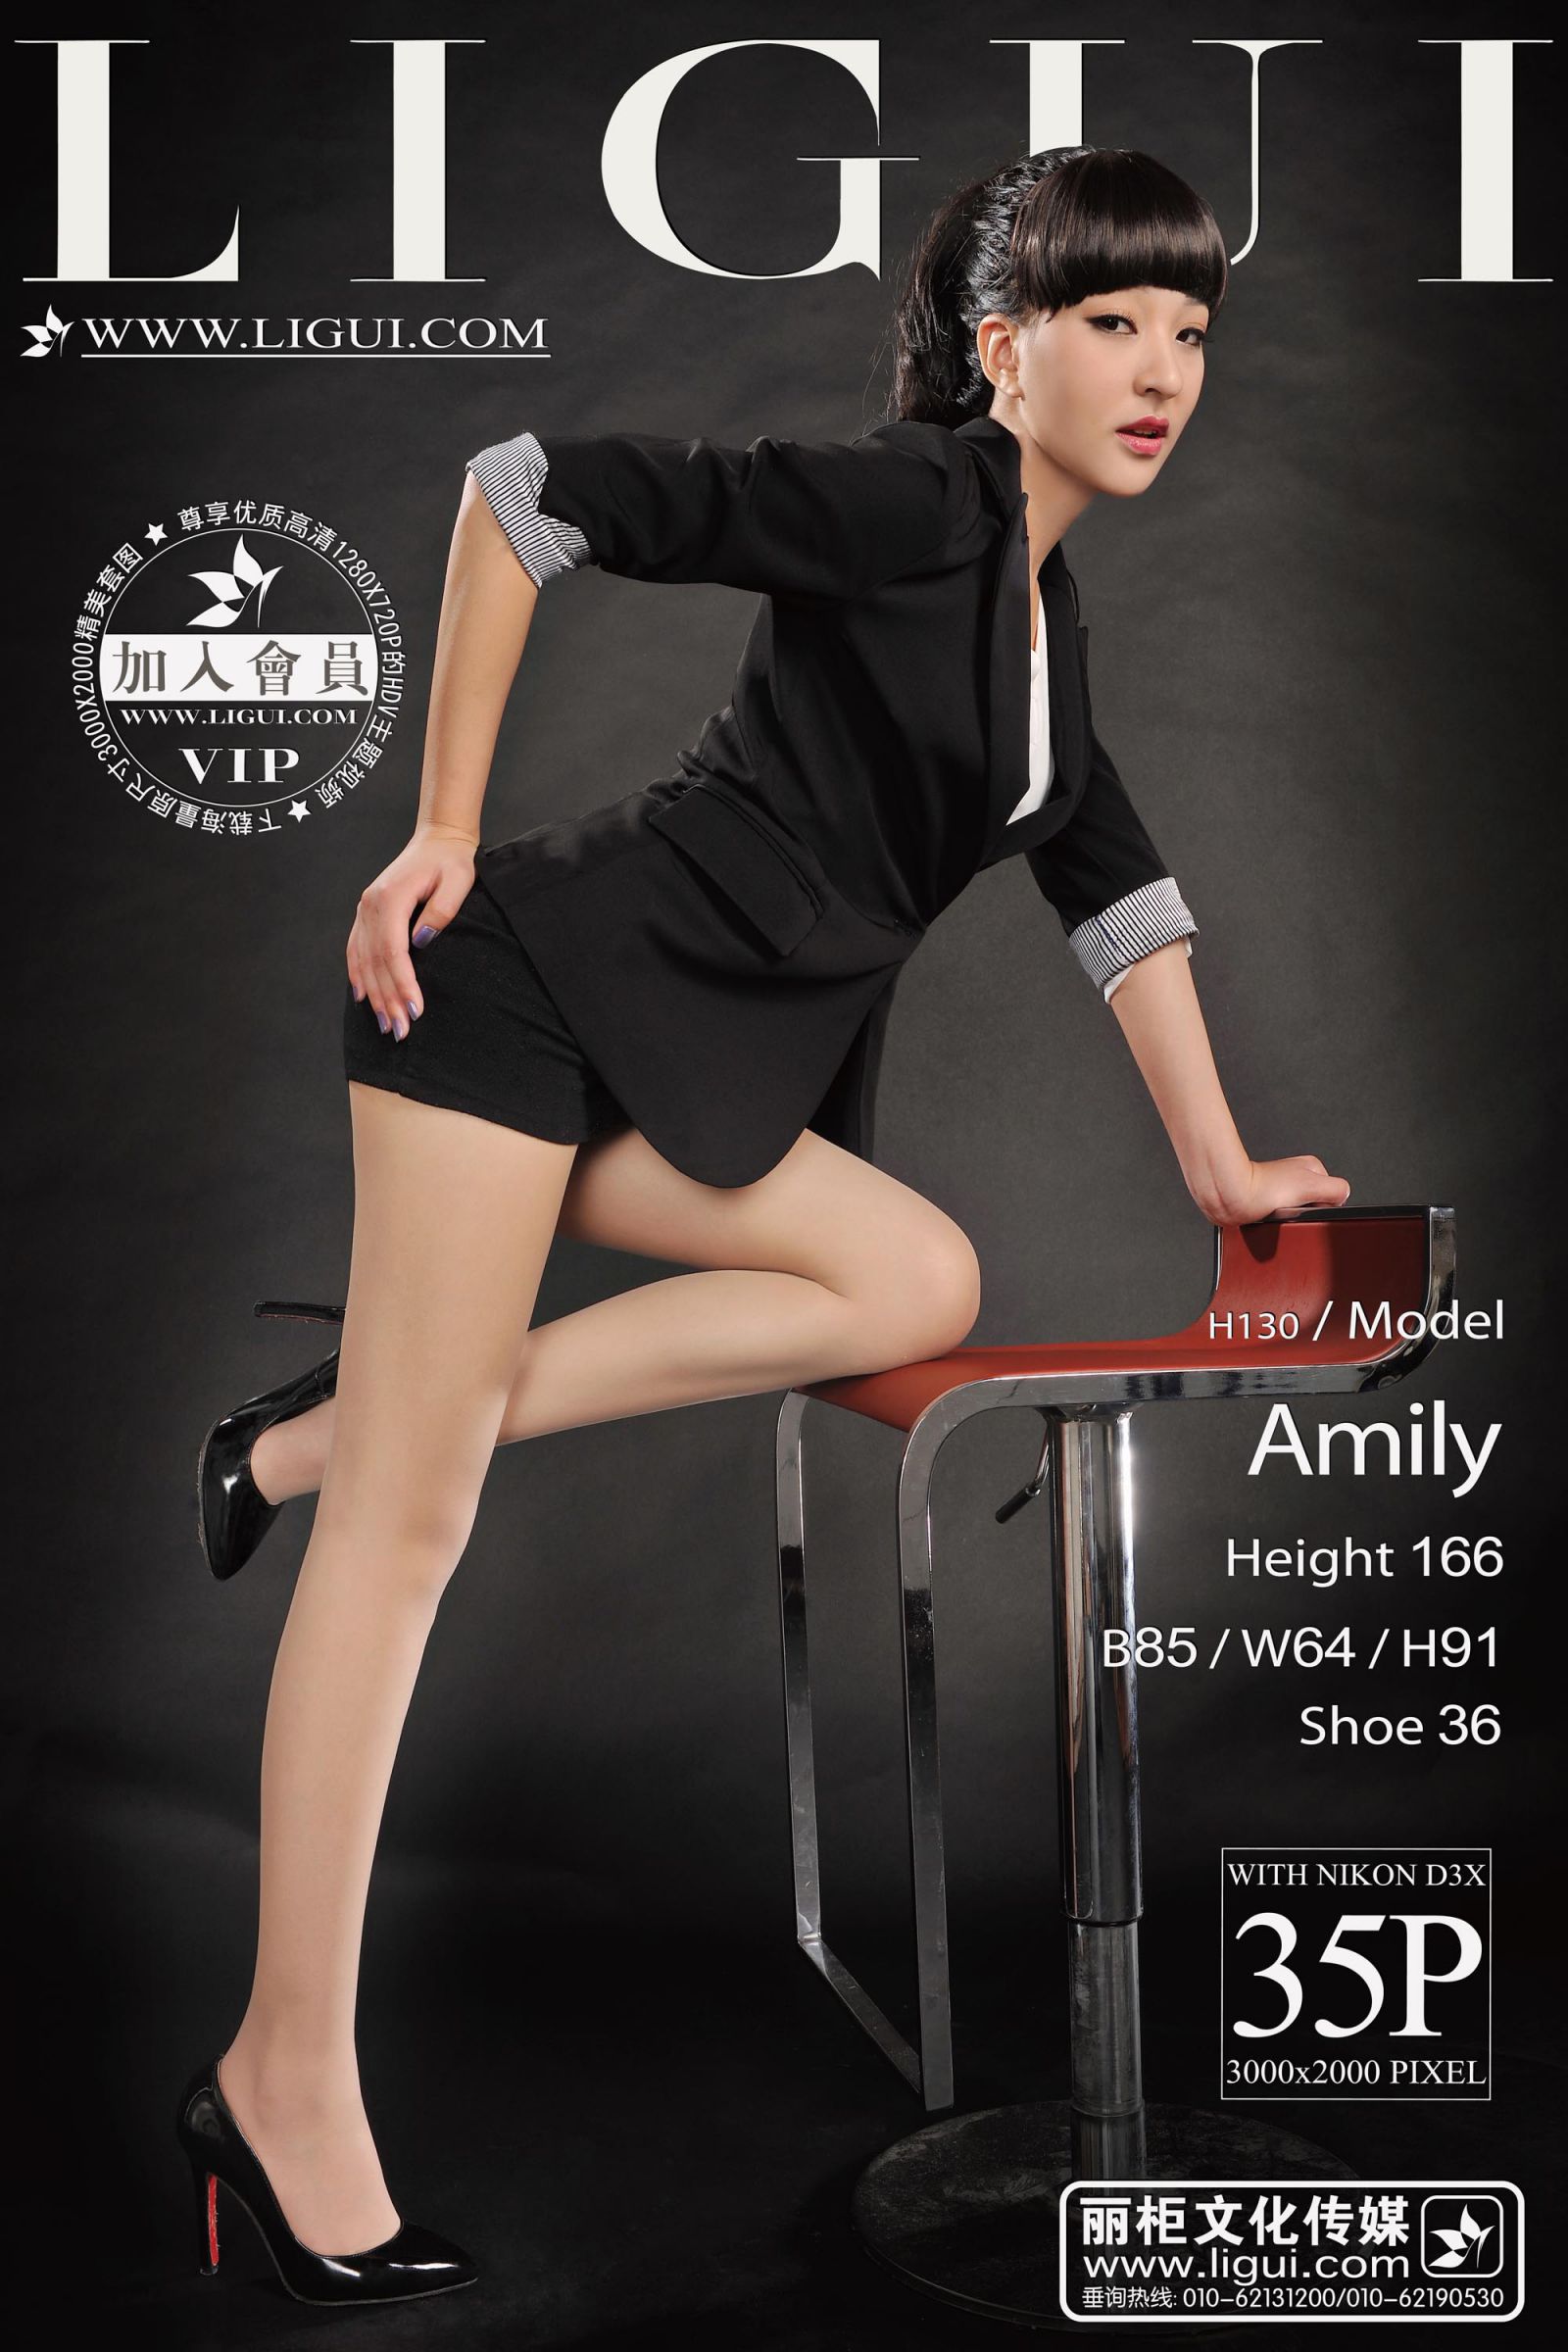 [LIGUI丽柜] Amily - 长腿高跟OL美腿美女